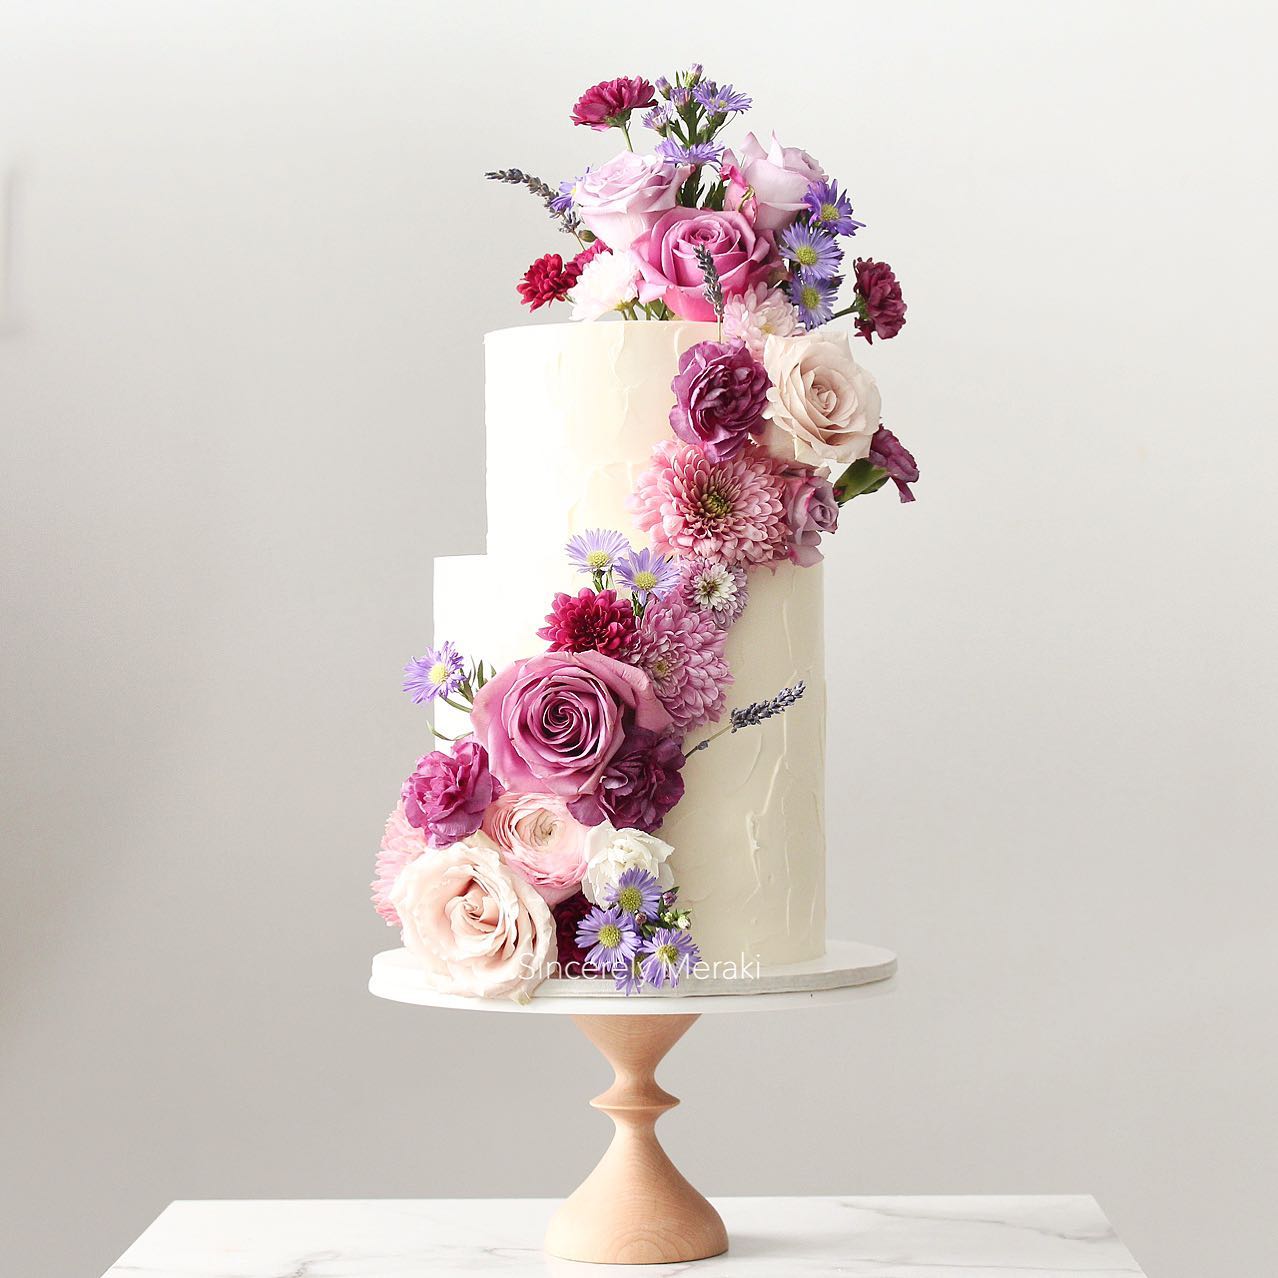 simple 2 tier wedding cake with purple flowers via sincerelymeraki